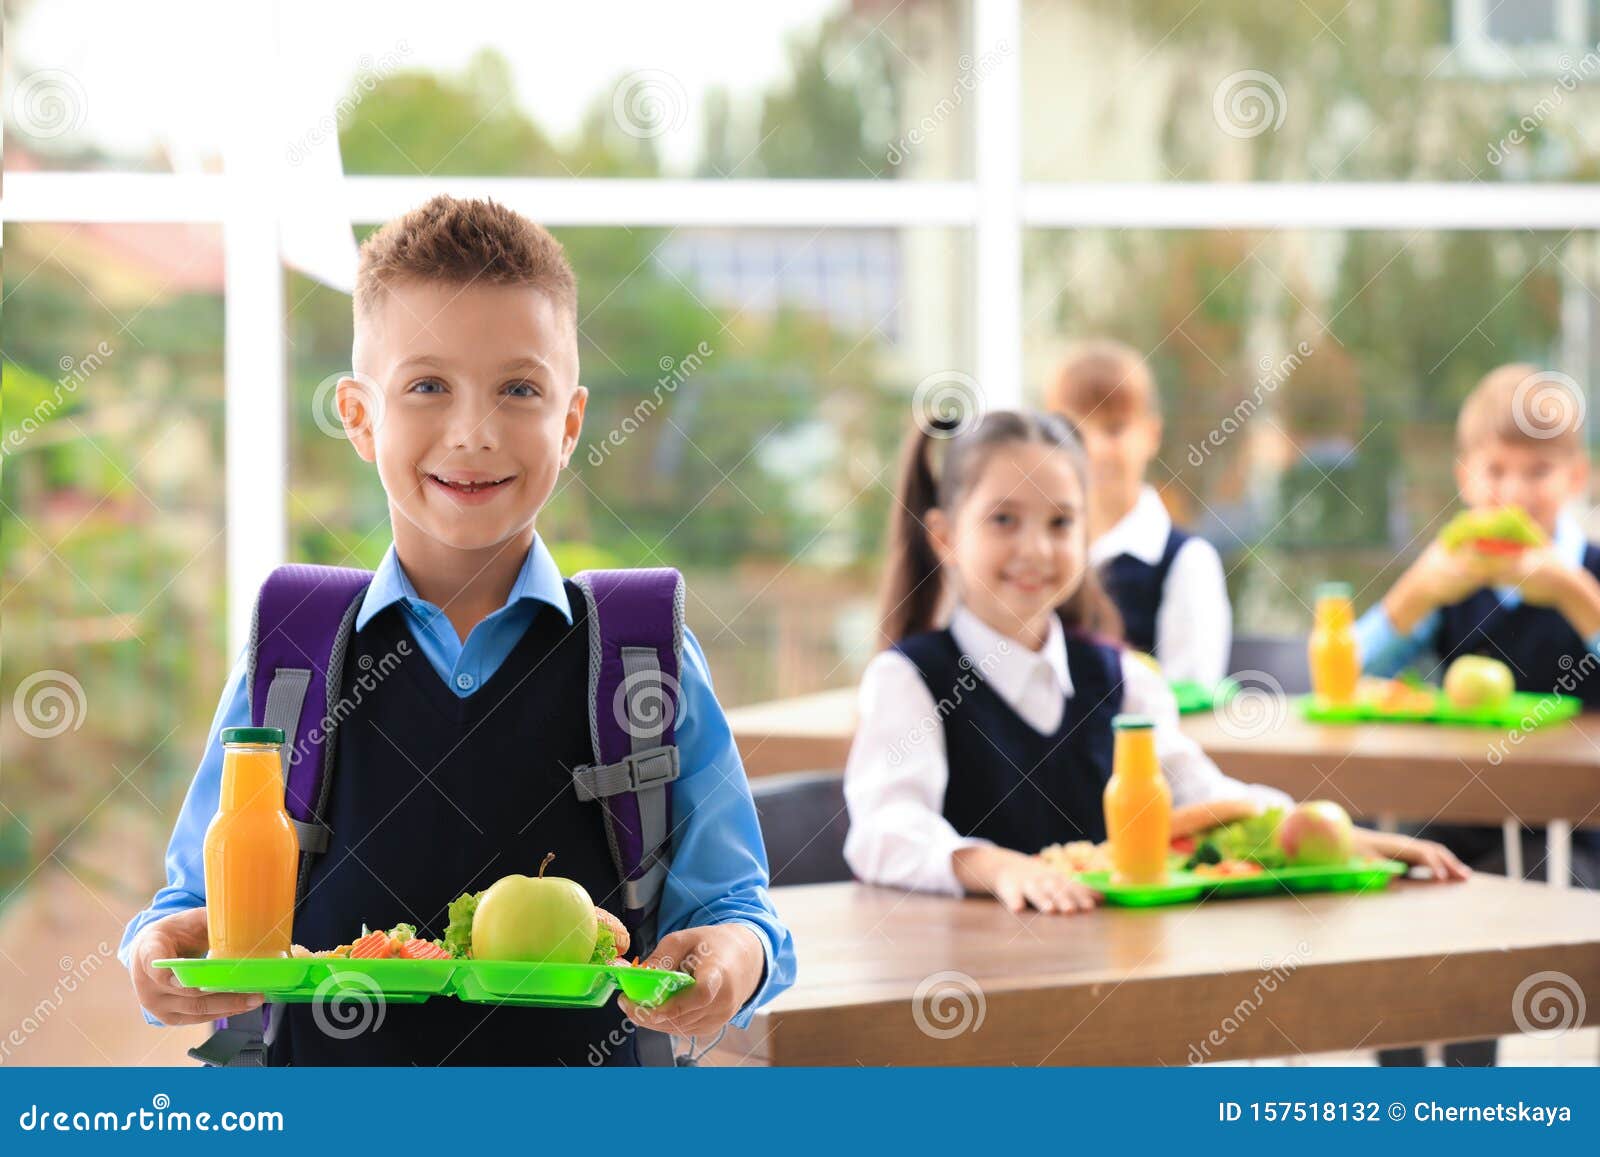 https://thumbs.dreamstime.com/z/happy-boy-holding-tray-healthy-food-school-canteen-157518132.jpg